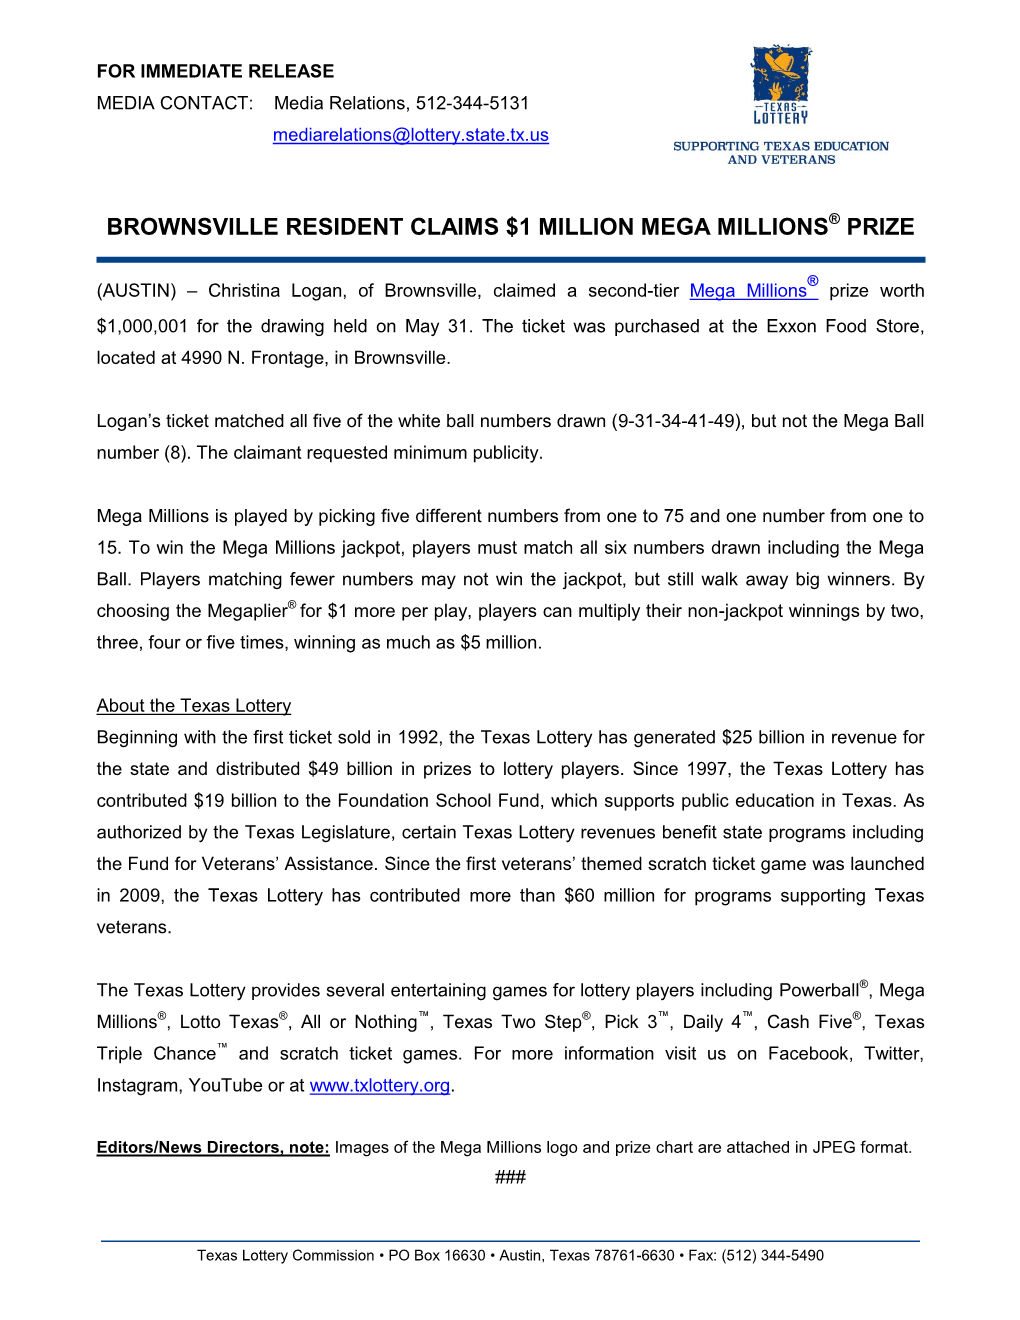 Brownsville Resident Claims $1 Million Mega Millions Prize